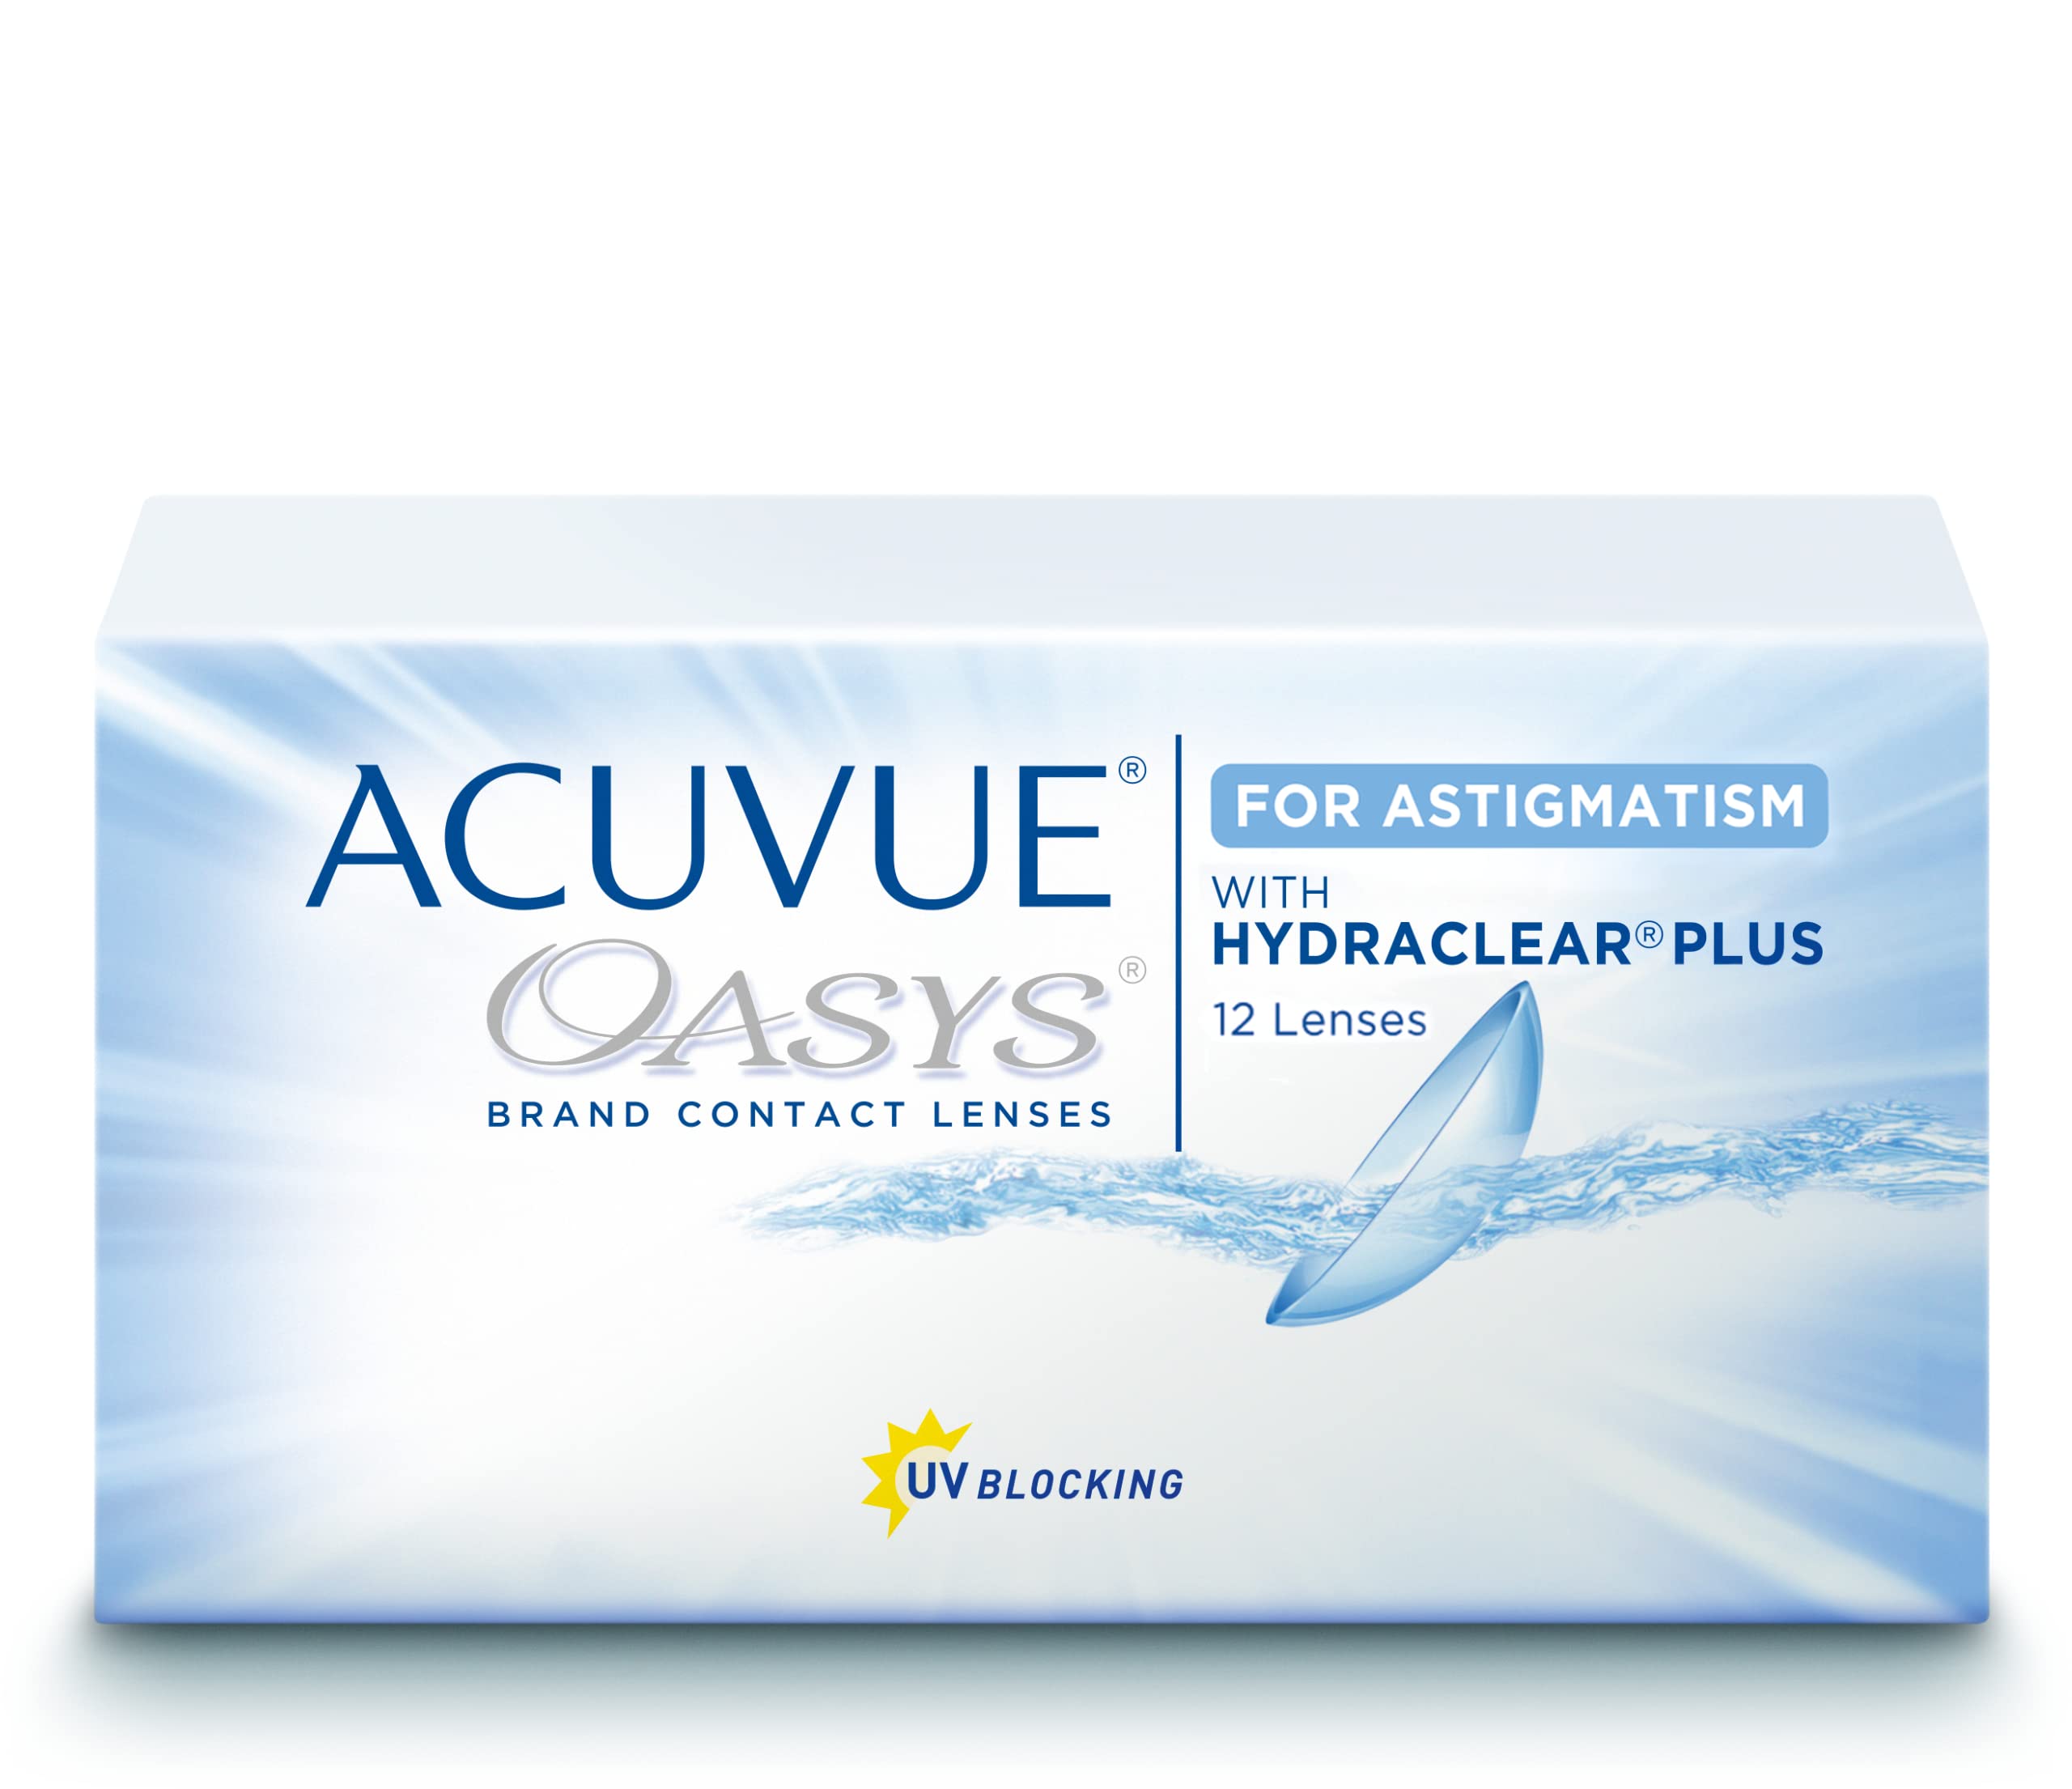 Acuvue Oasys for Astigmatism 2-Wochenlinsen weich, 12 Stück/BC 8.6 mm/DIA 14.5 / CYL -1.75 / Achse 150 / -8 Dioptrien